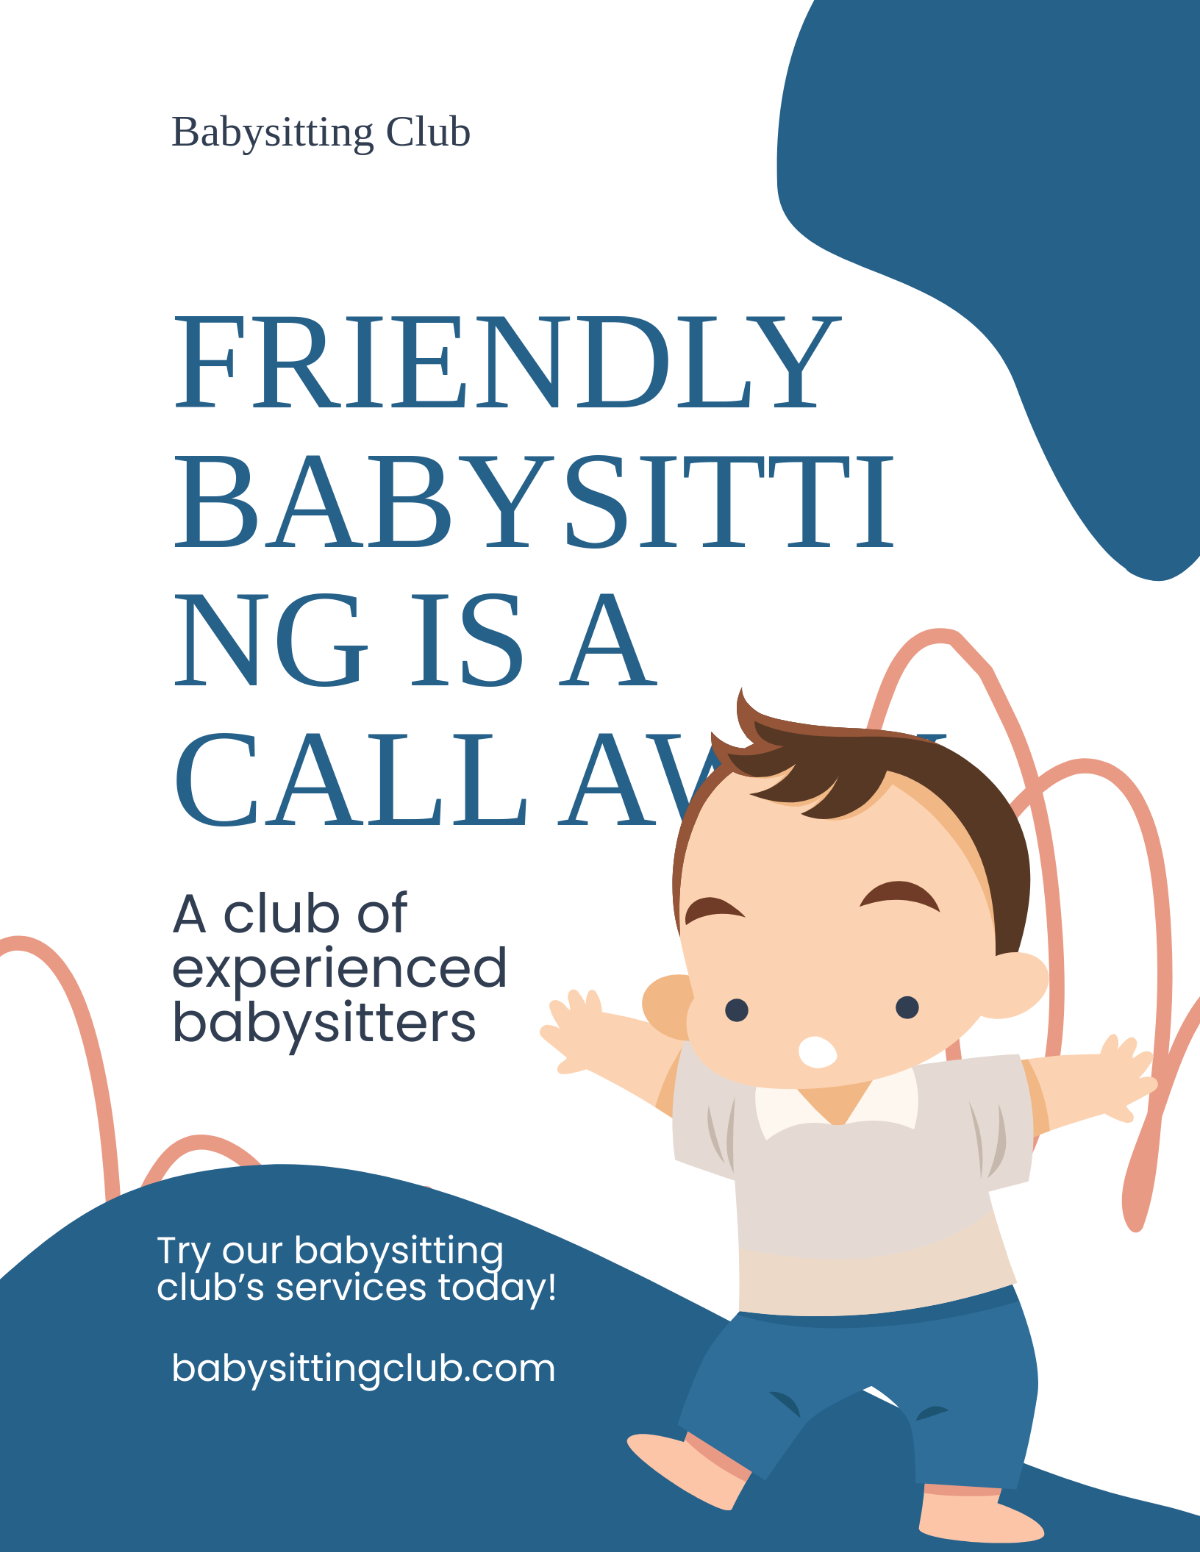 Babysitting Club Flyer